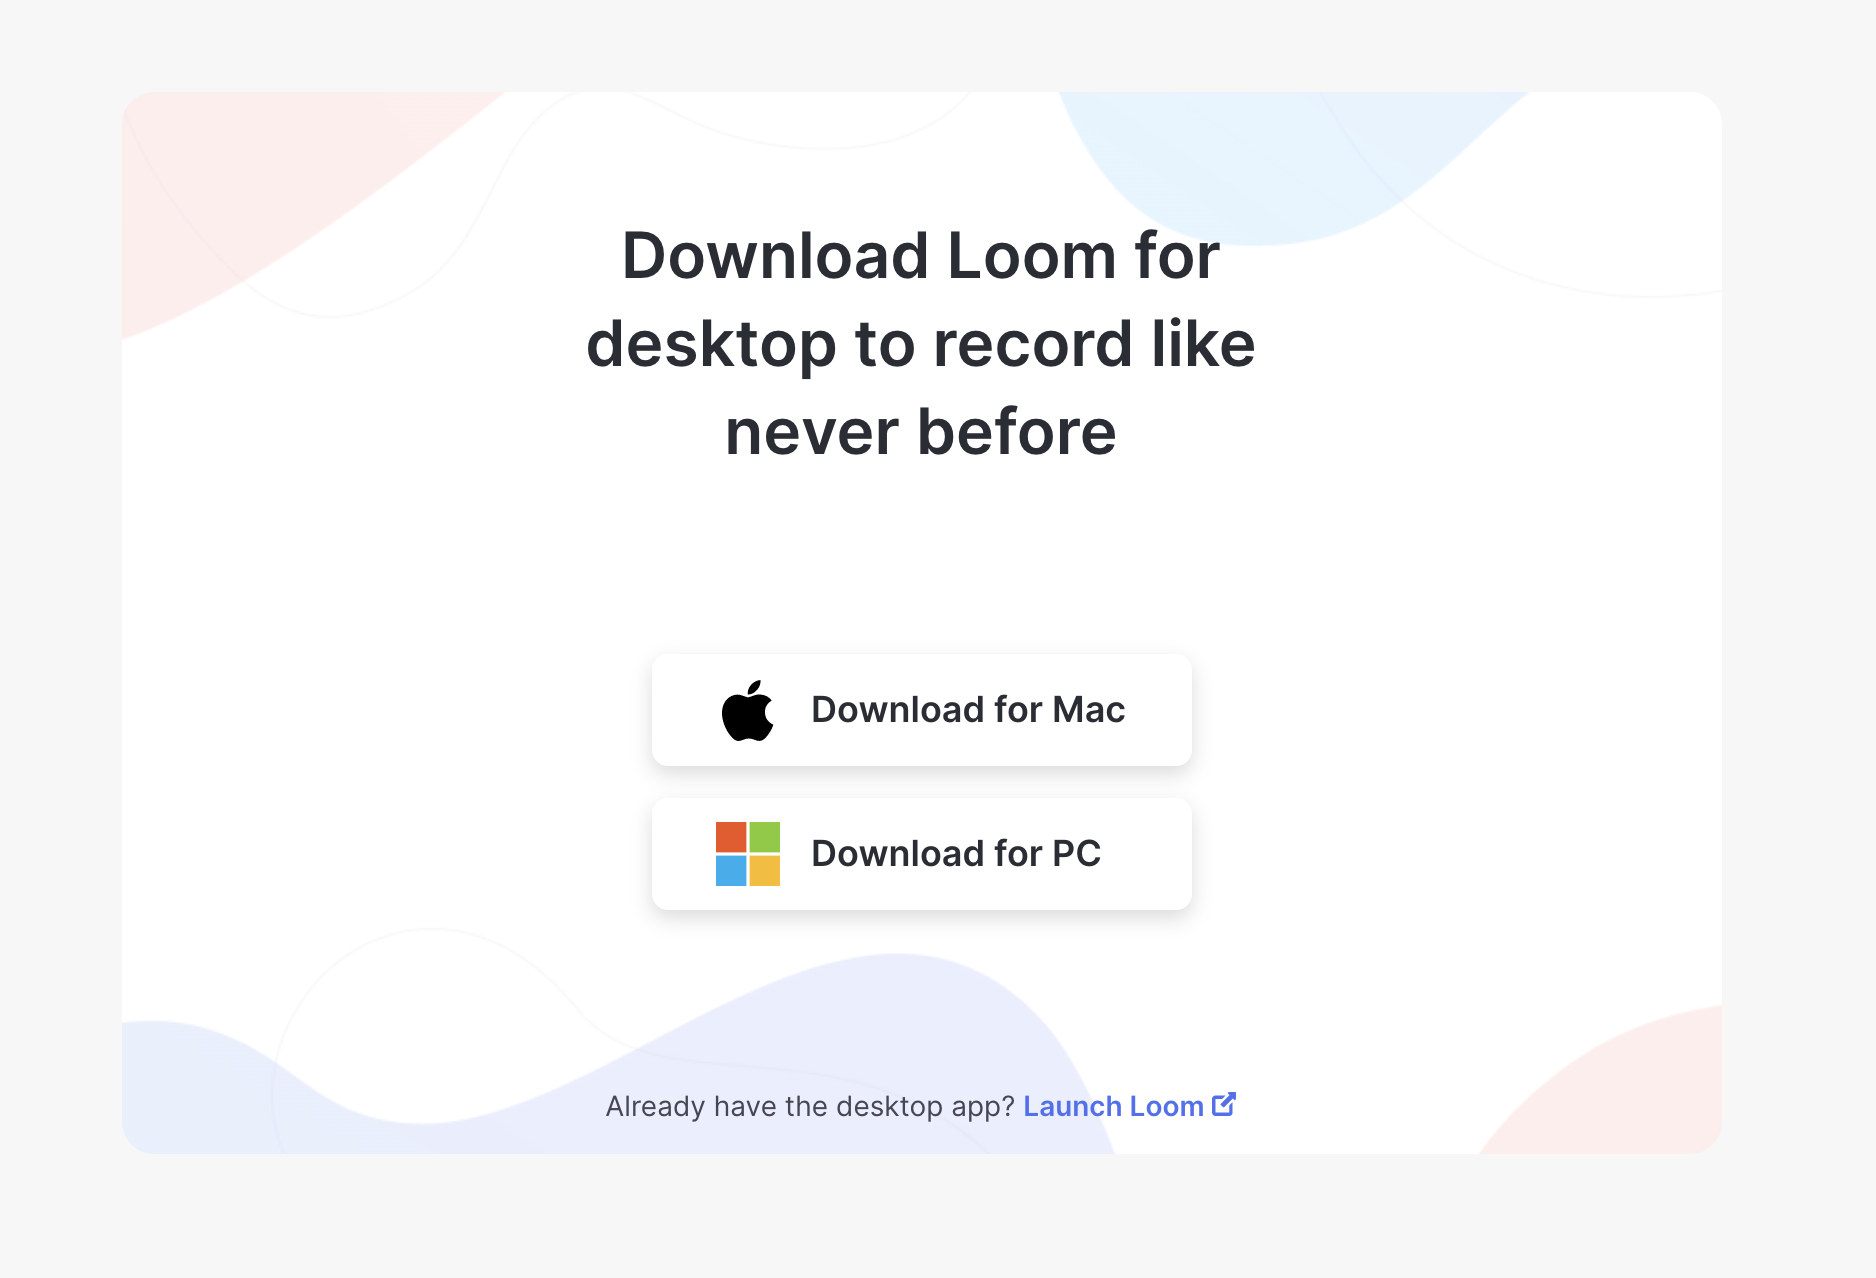 Download loom